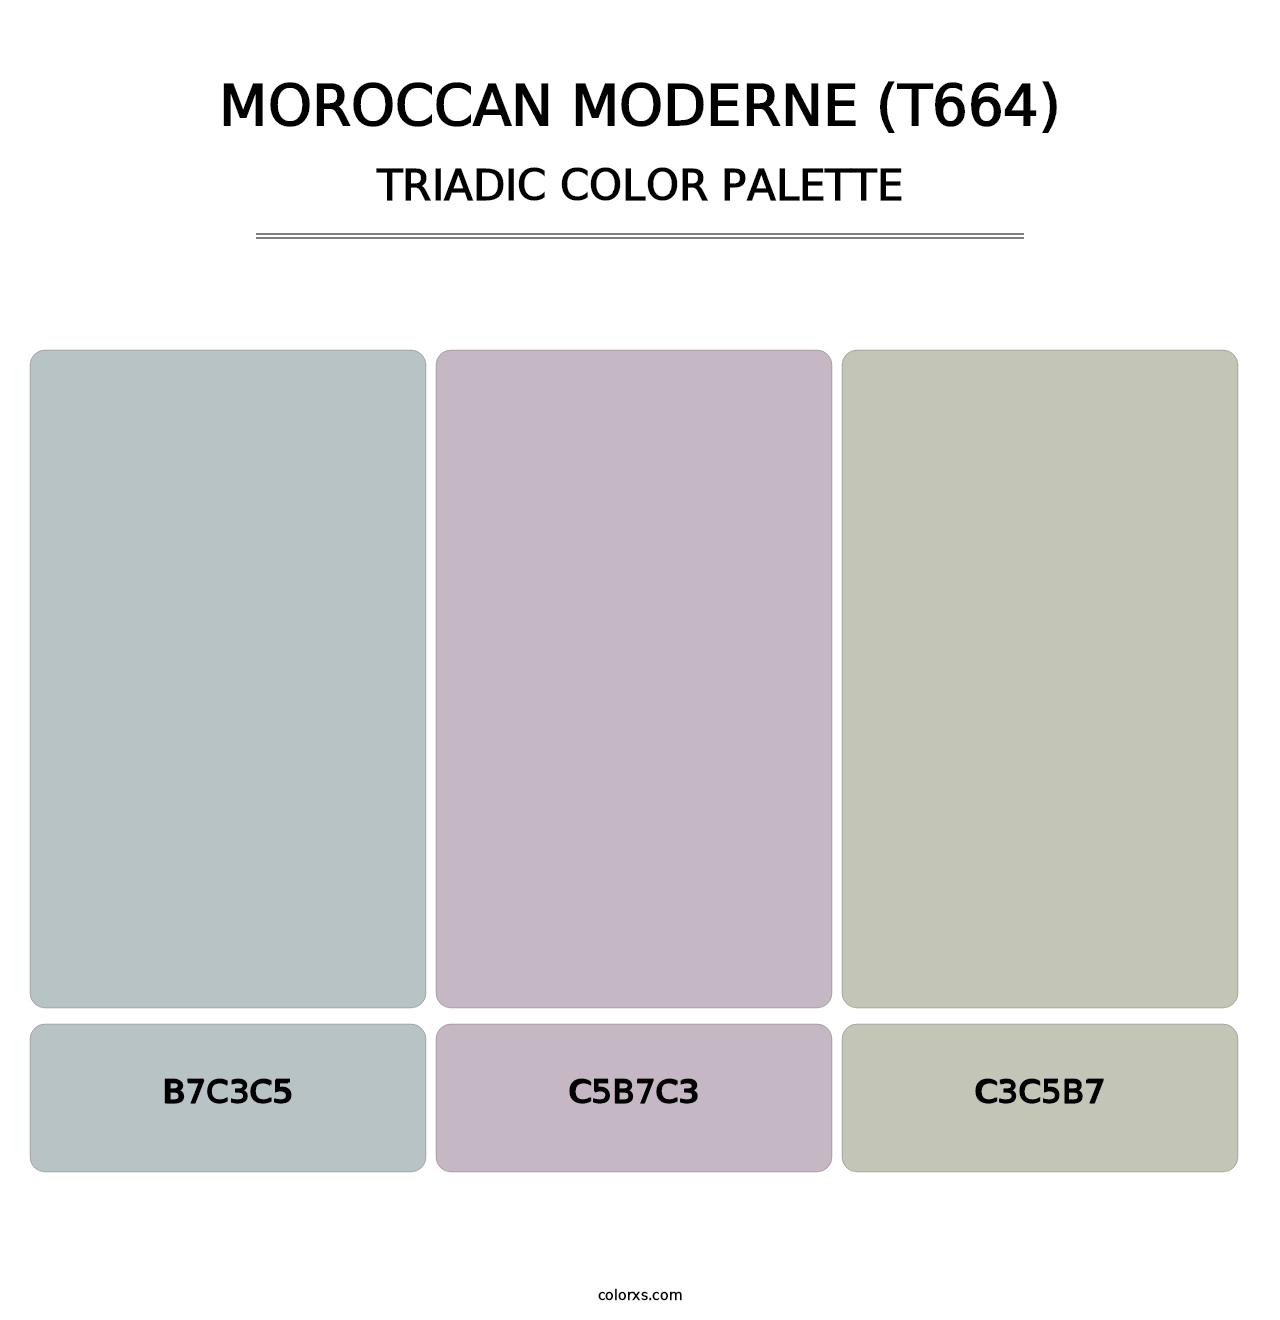 Moroccan Moderne (T664) - Triadic Color Palette